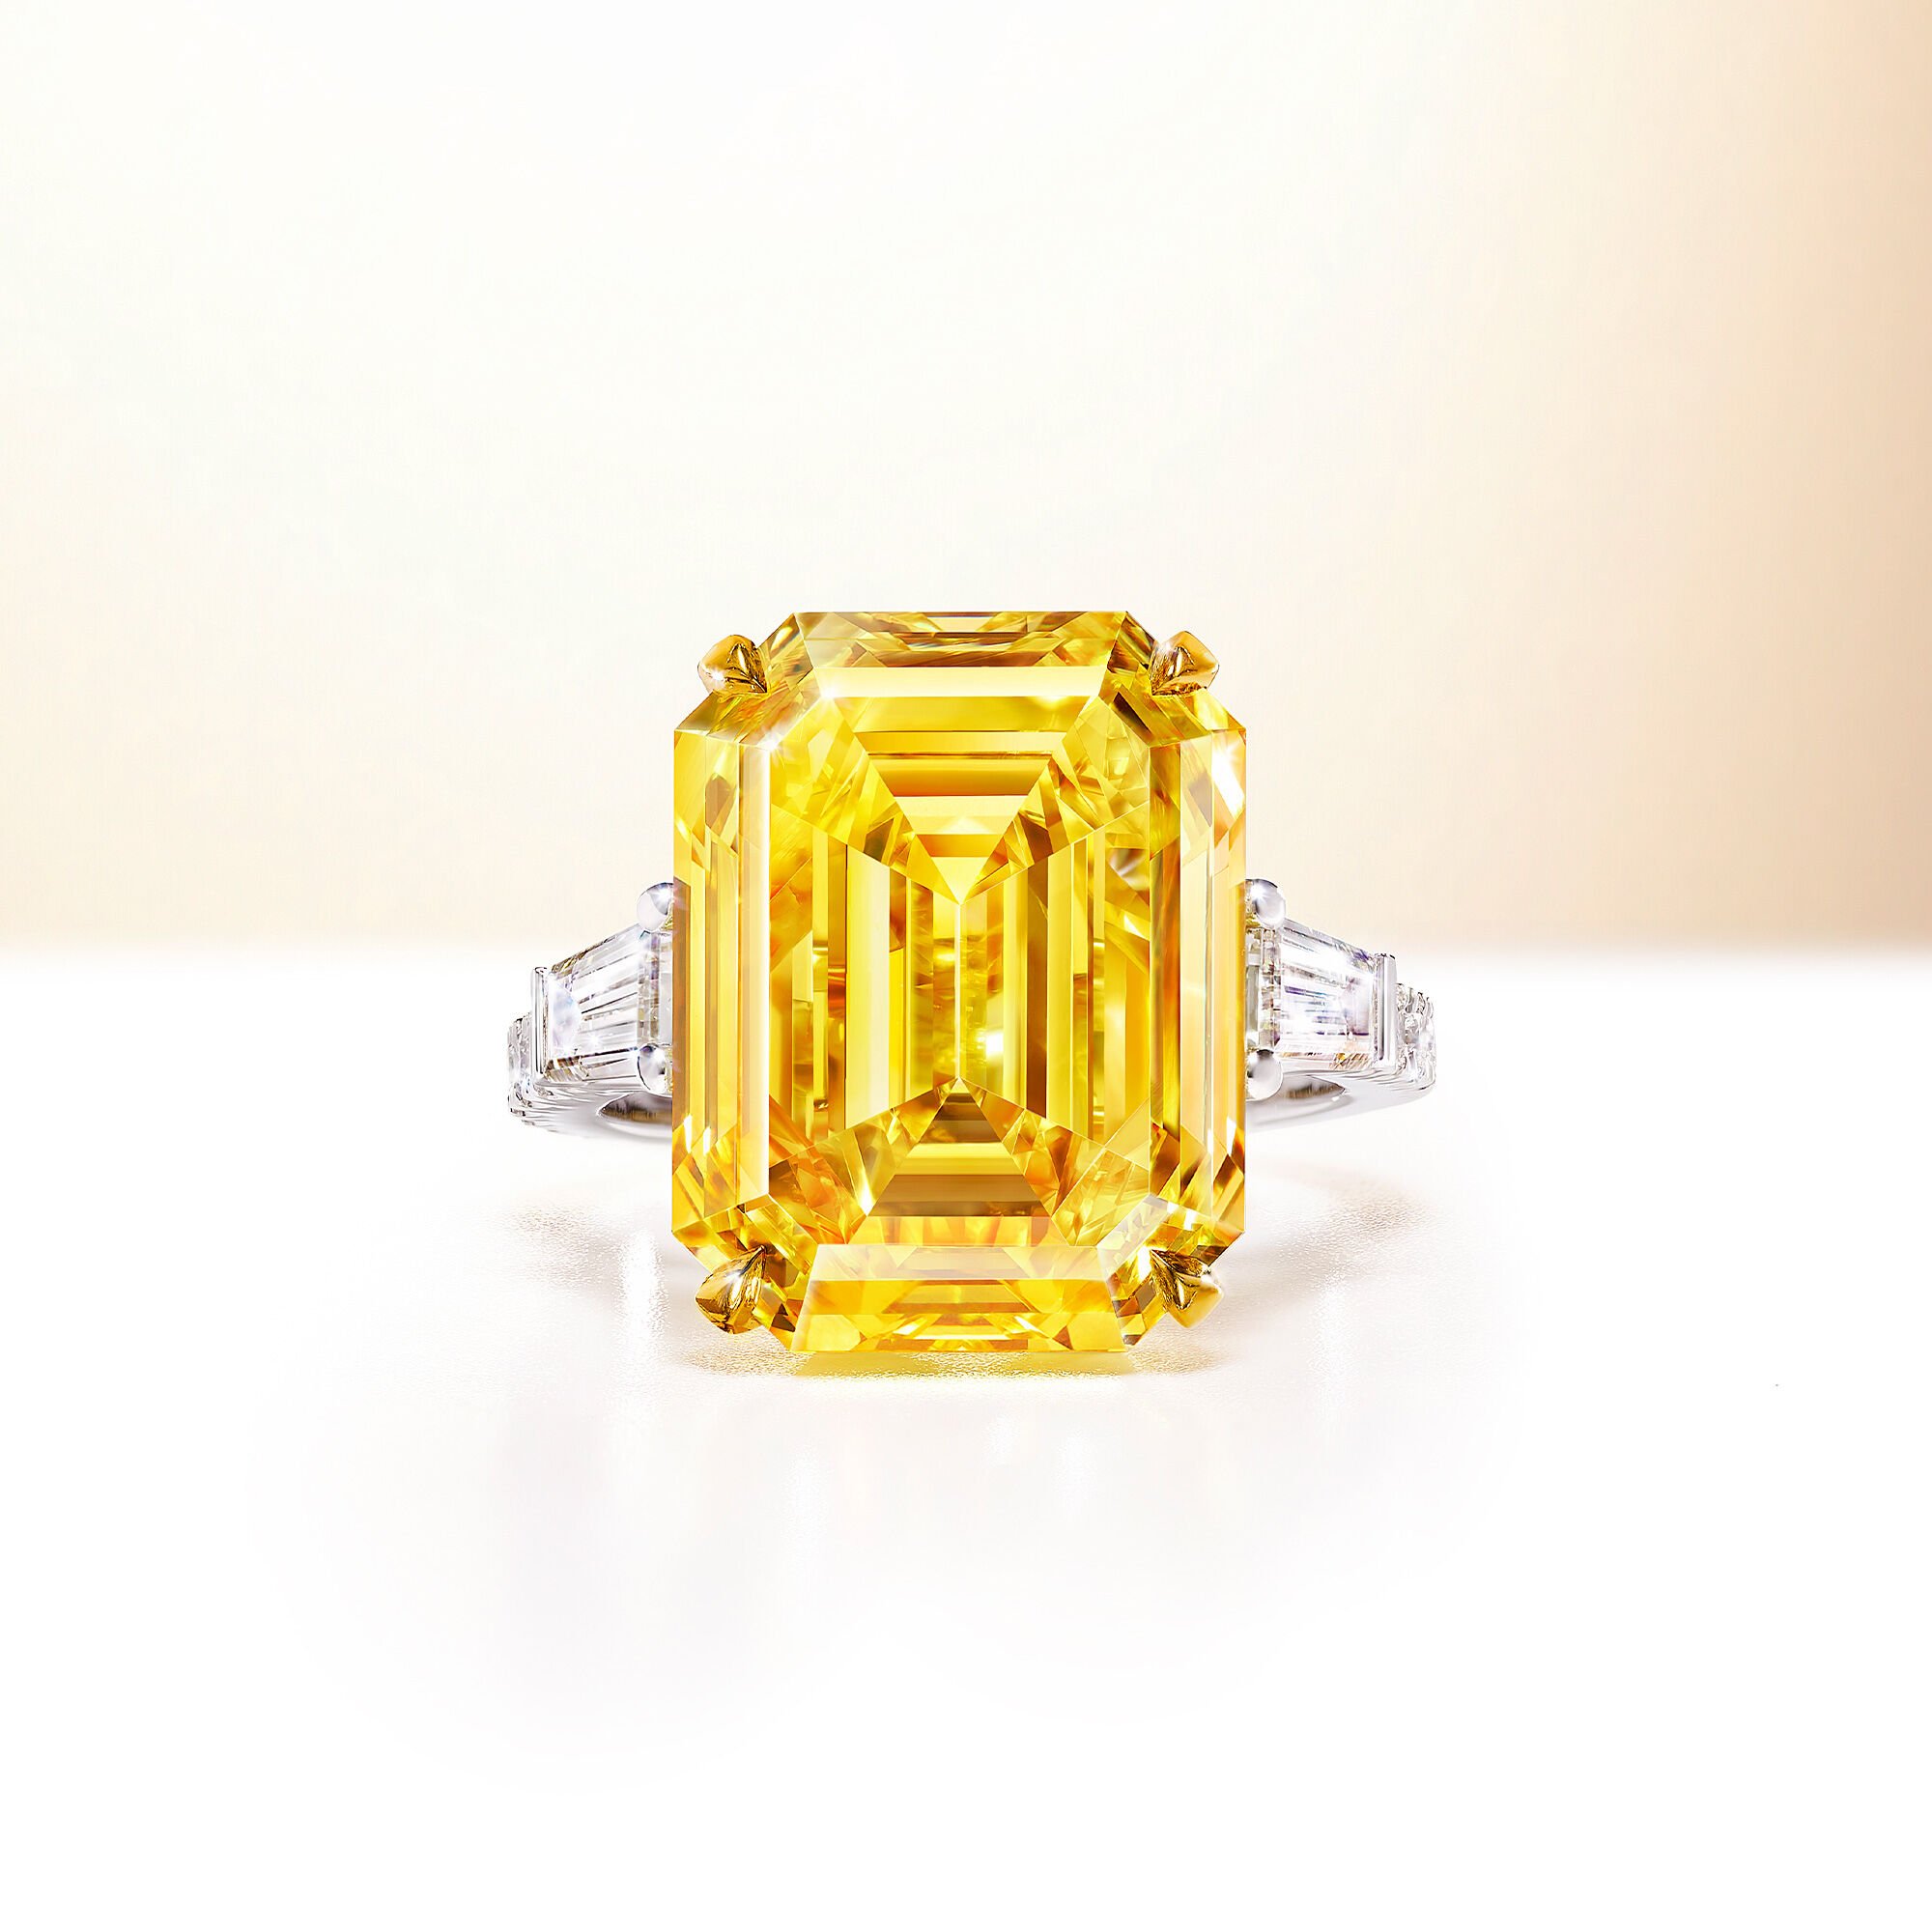 A 15.47 fancy vivid yellow emerald cut Graff diamond ring